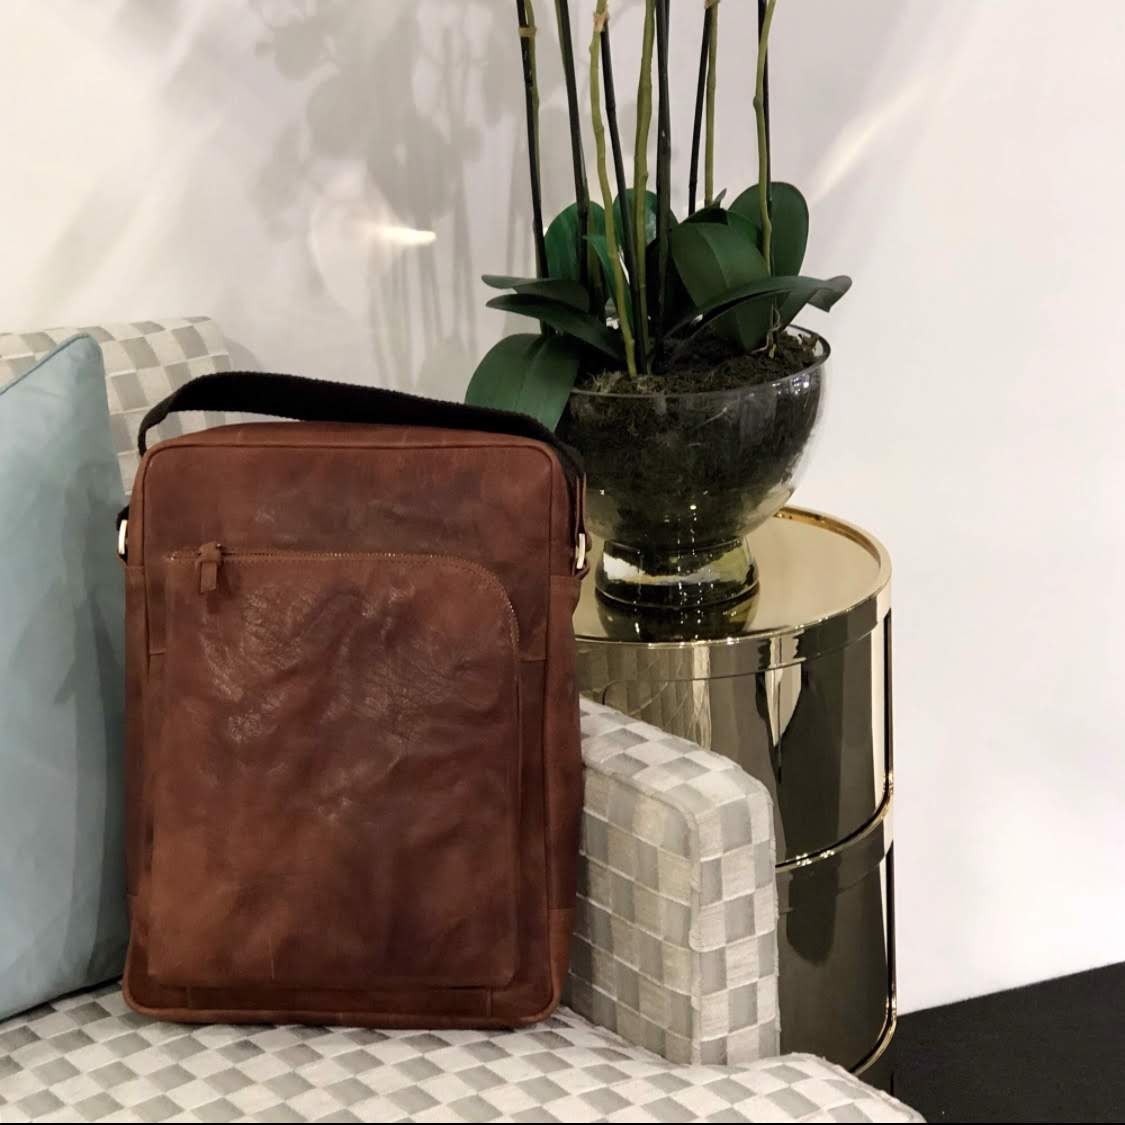 A4 Brown leather messenger bag